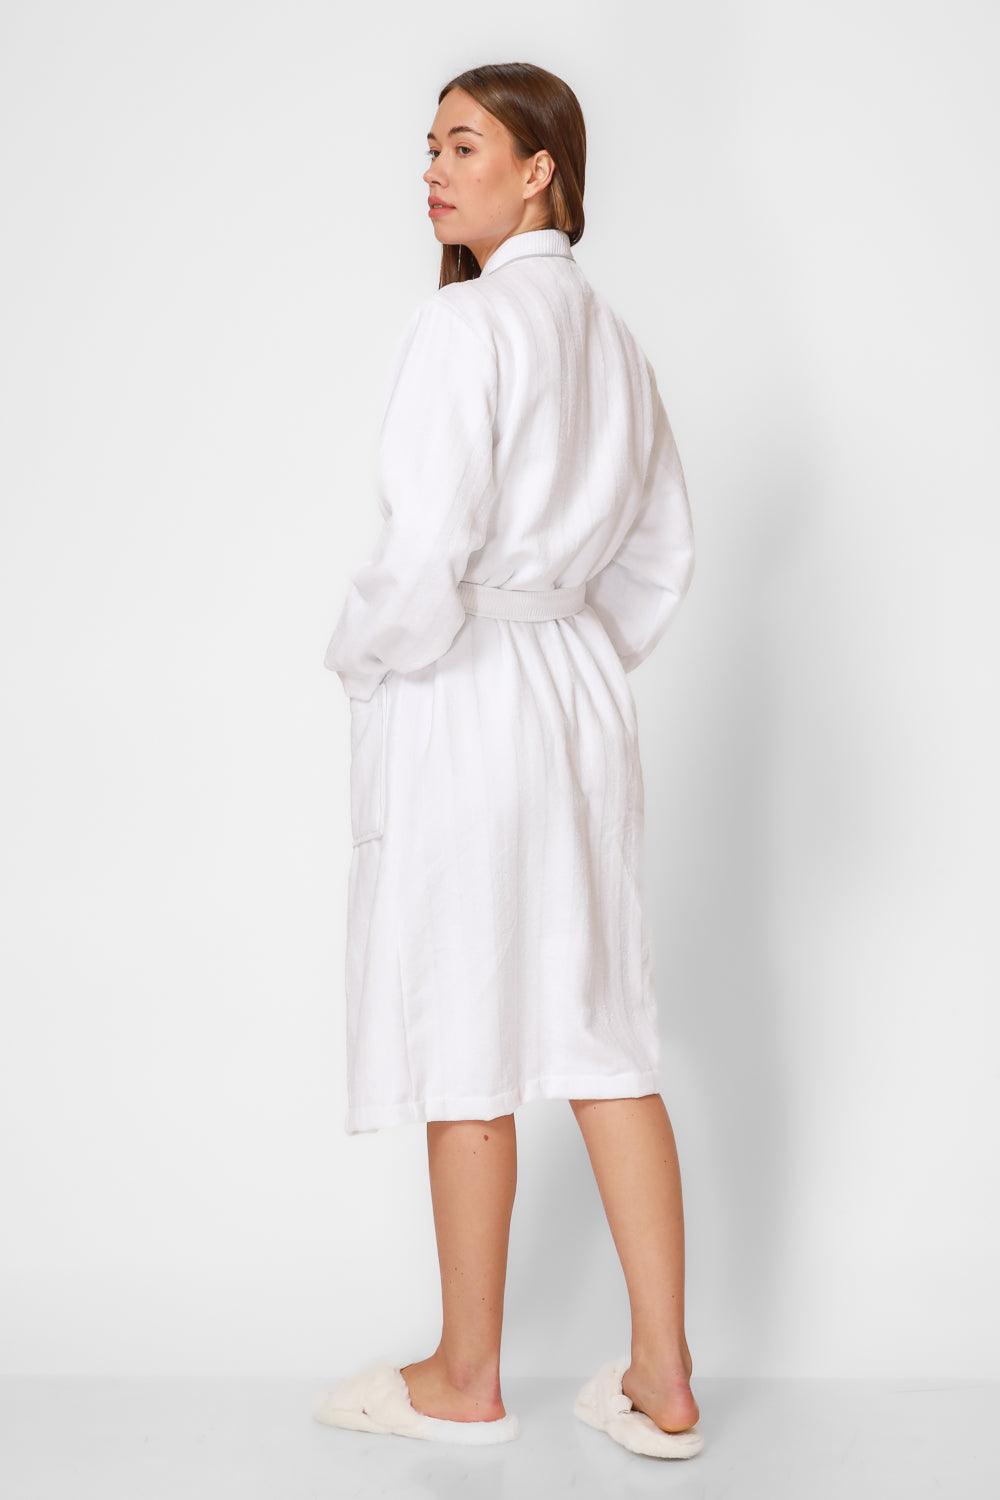 KENNETH COLE - חלוק מגבת אריגת פסים בצבע לבן - MASHBIR//365